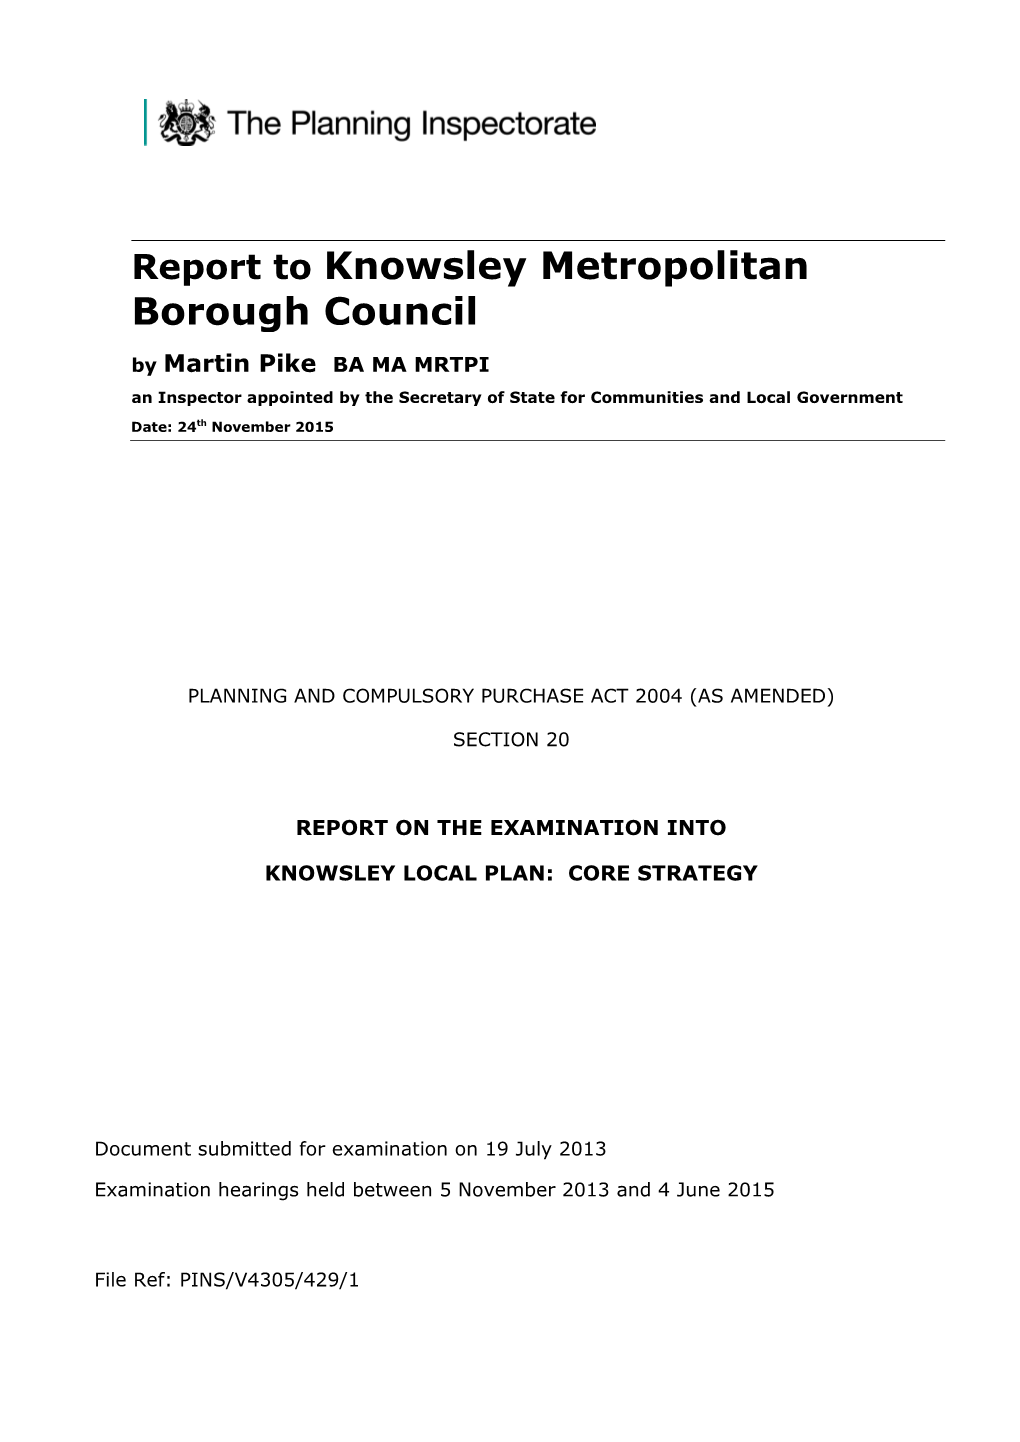 Report to Knowsley Metropolitan Borough Council